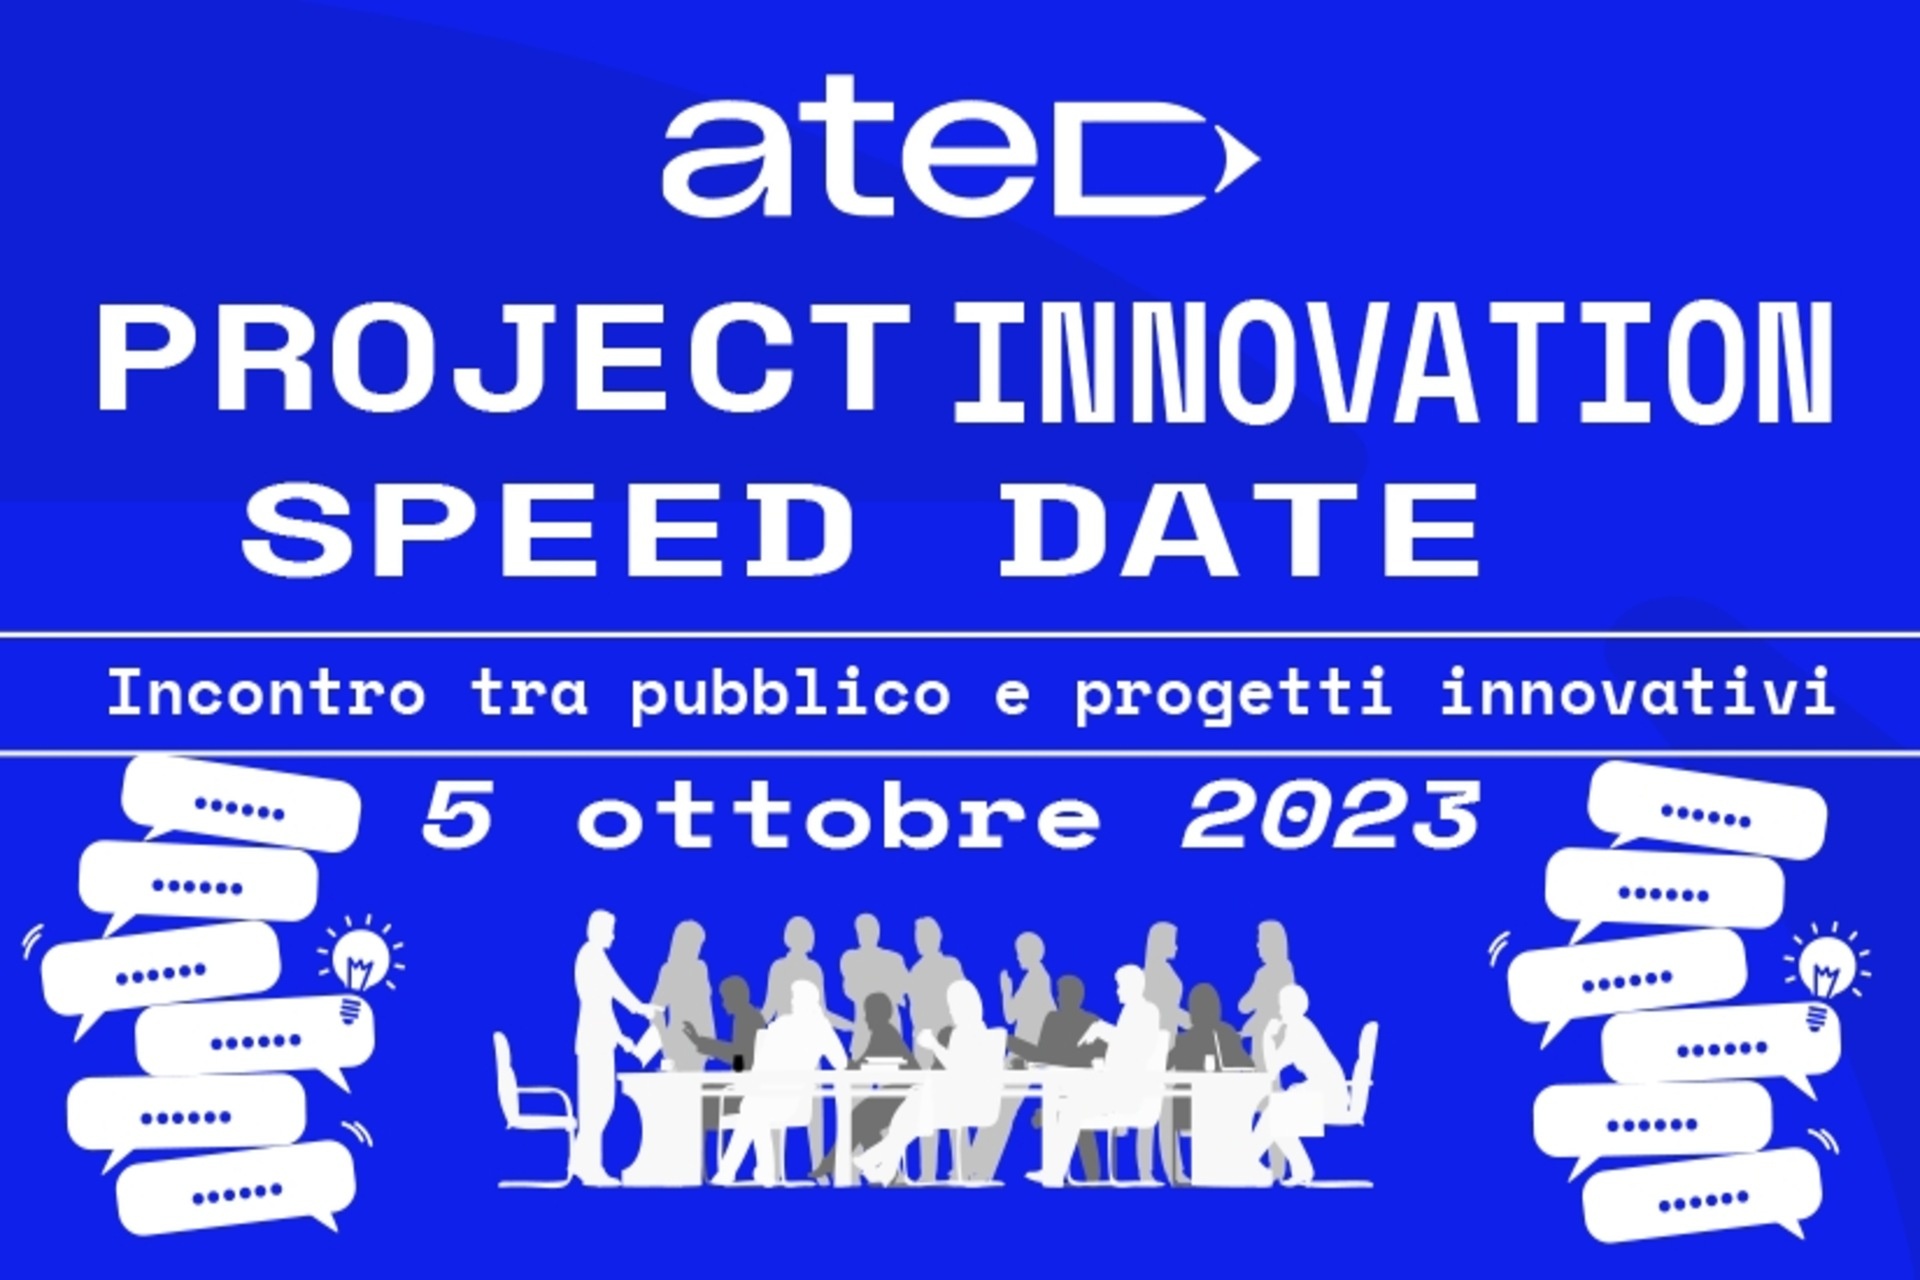 Projekti: ATED projekta inovāciju ātruma datuma plakāts